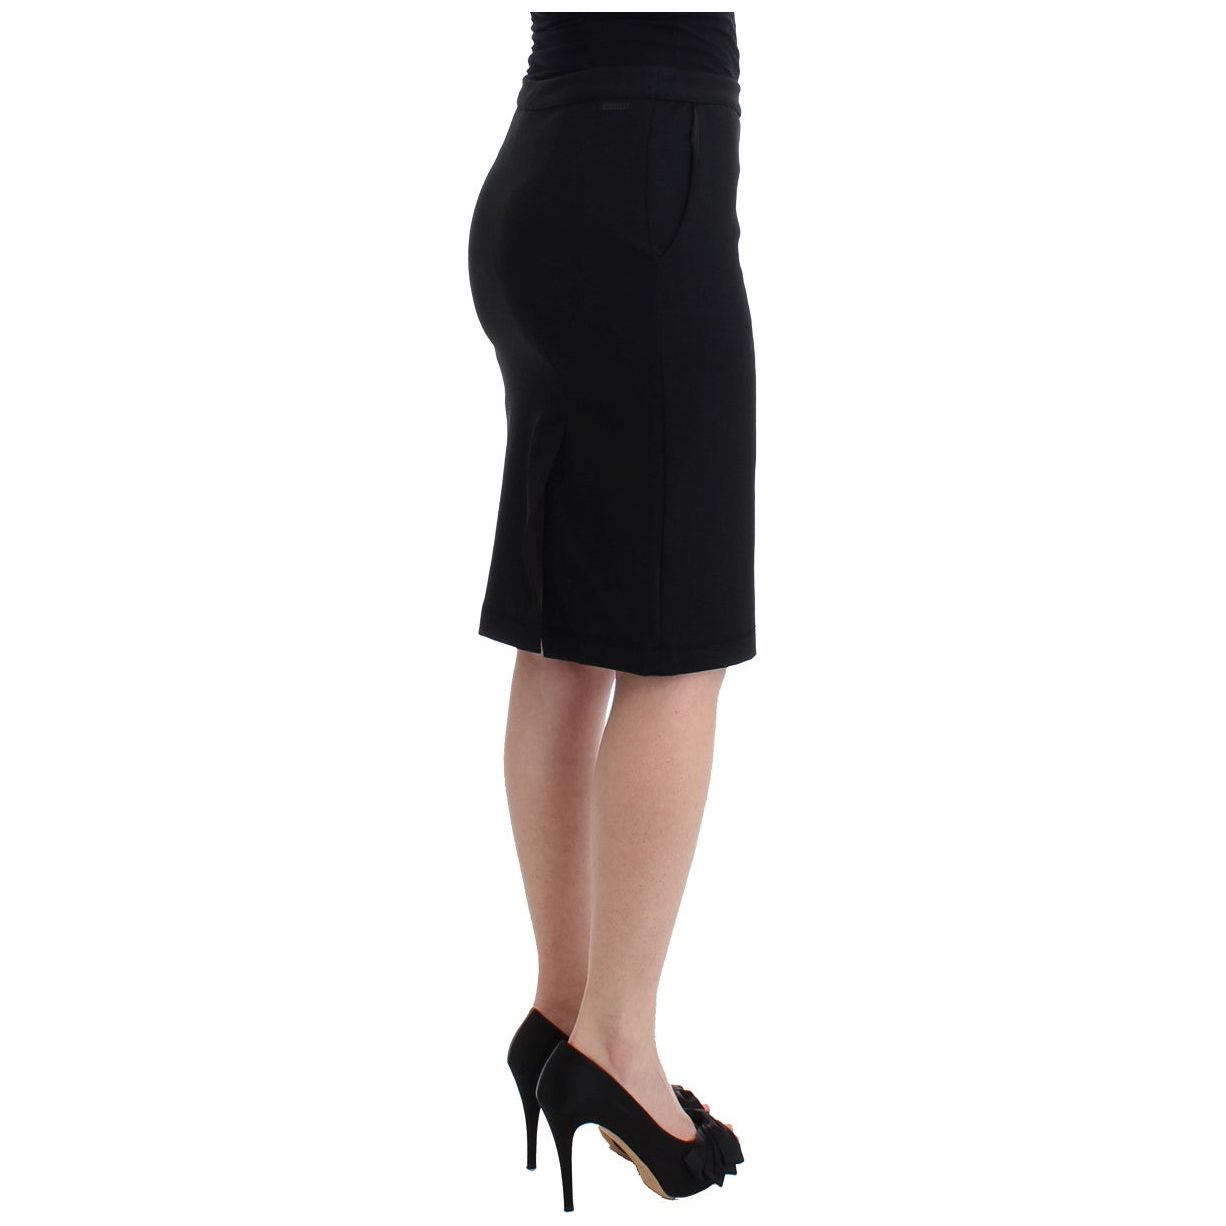 GF FerreChic Black Pencil Skirt Knee Length with Side ZipMcRichard Designer Brands£129.00